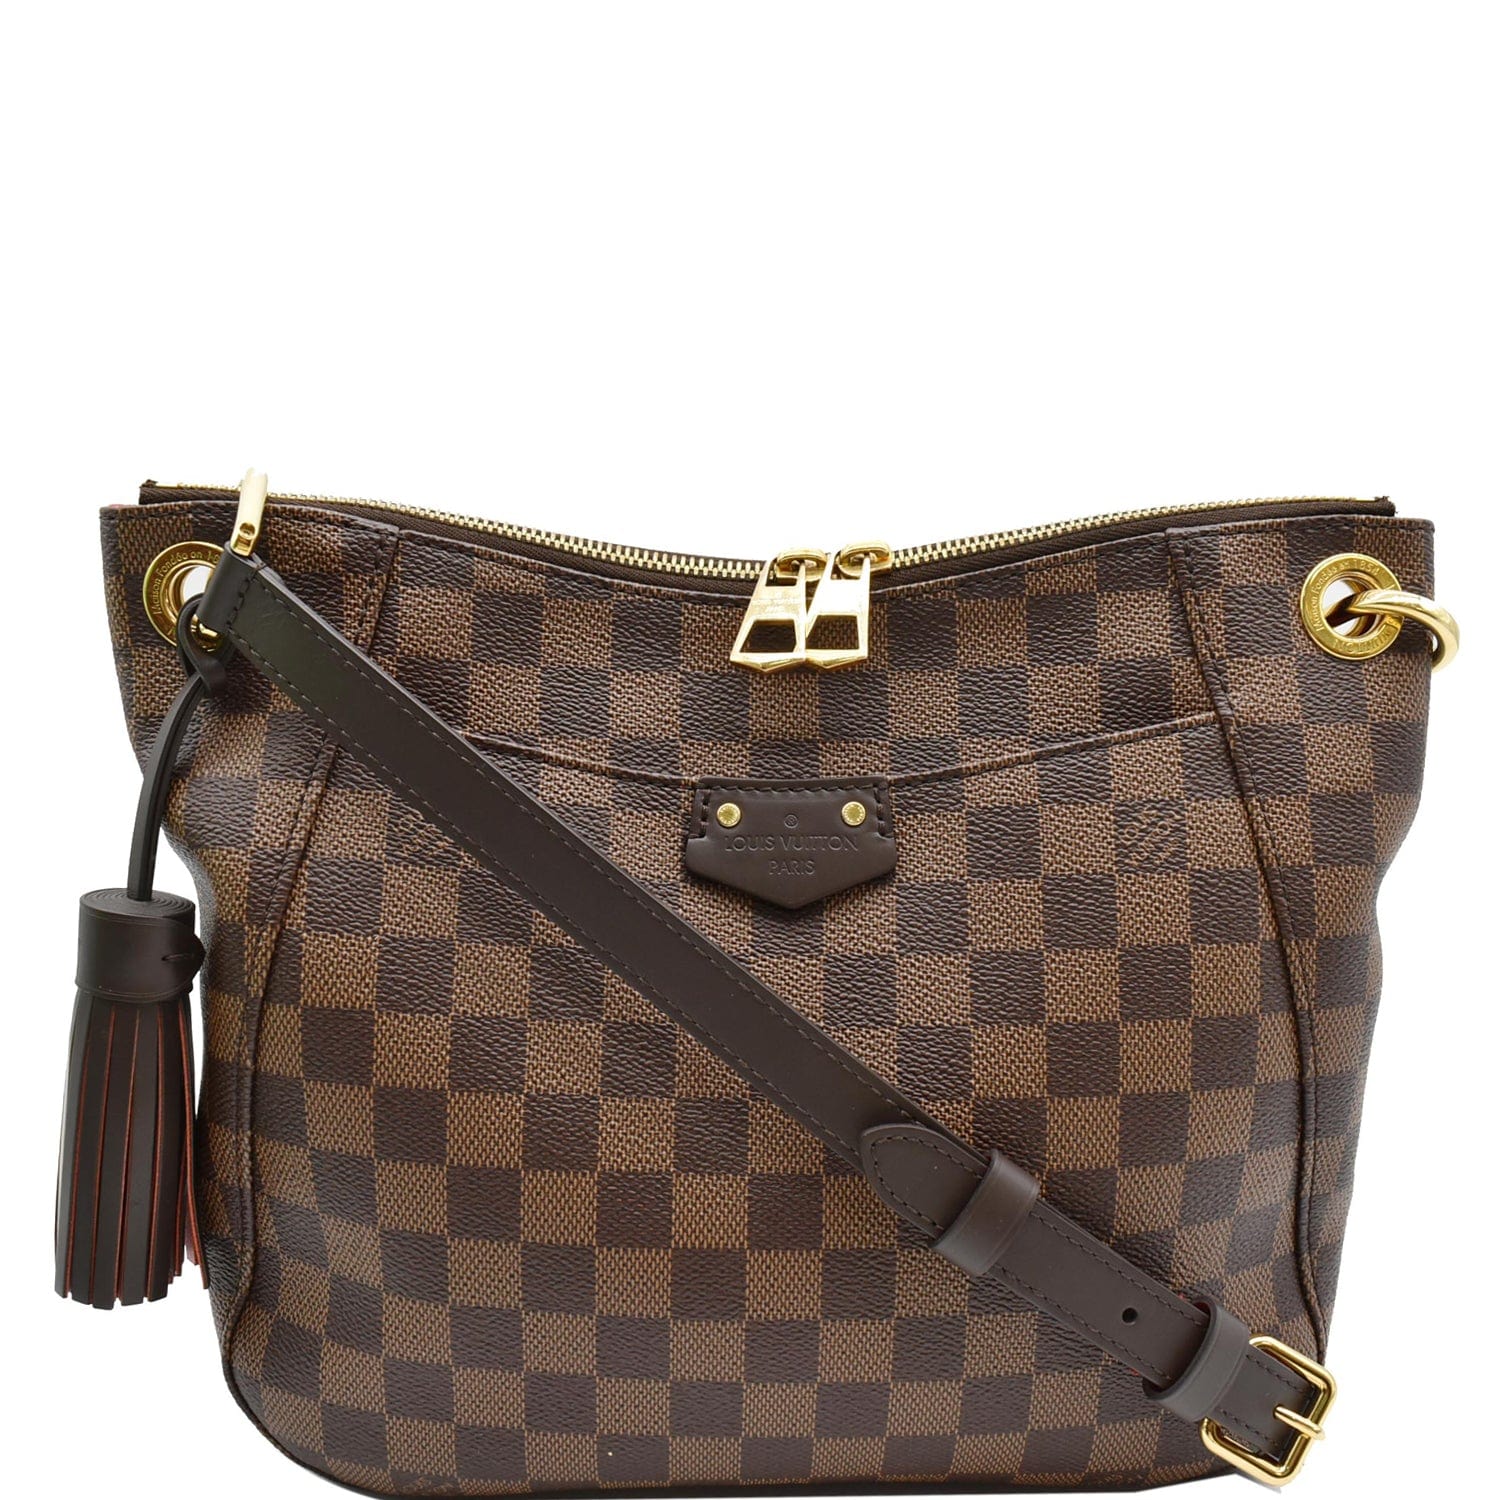 Unboxing Latest Louis Vuitton Sully handbag, Southbank Cross body